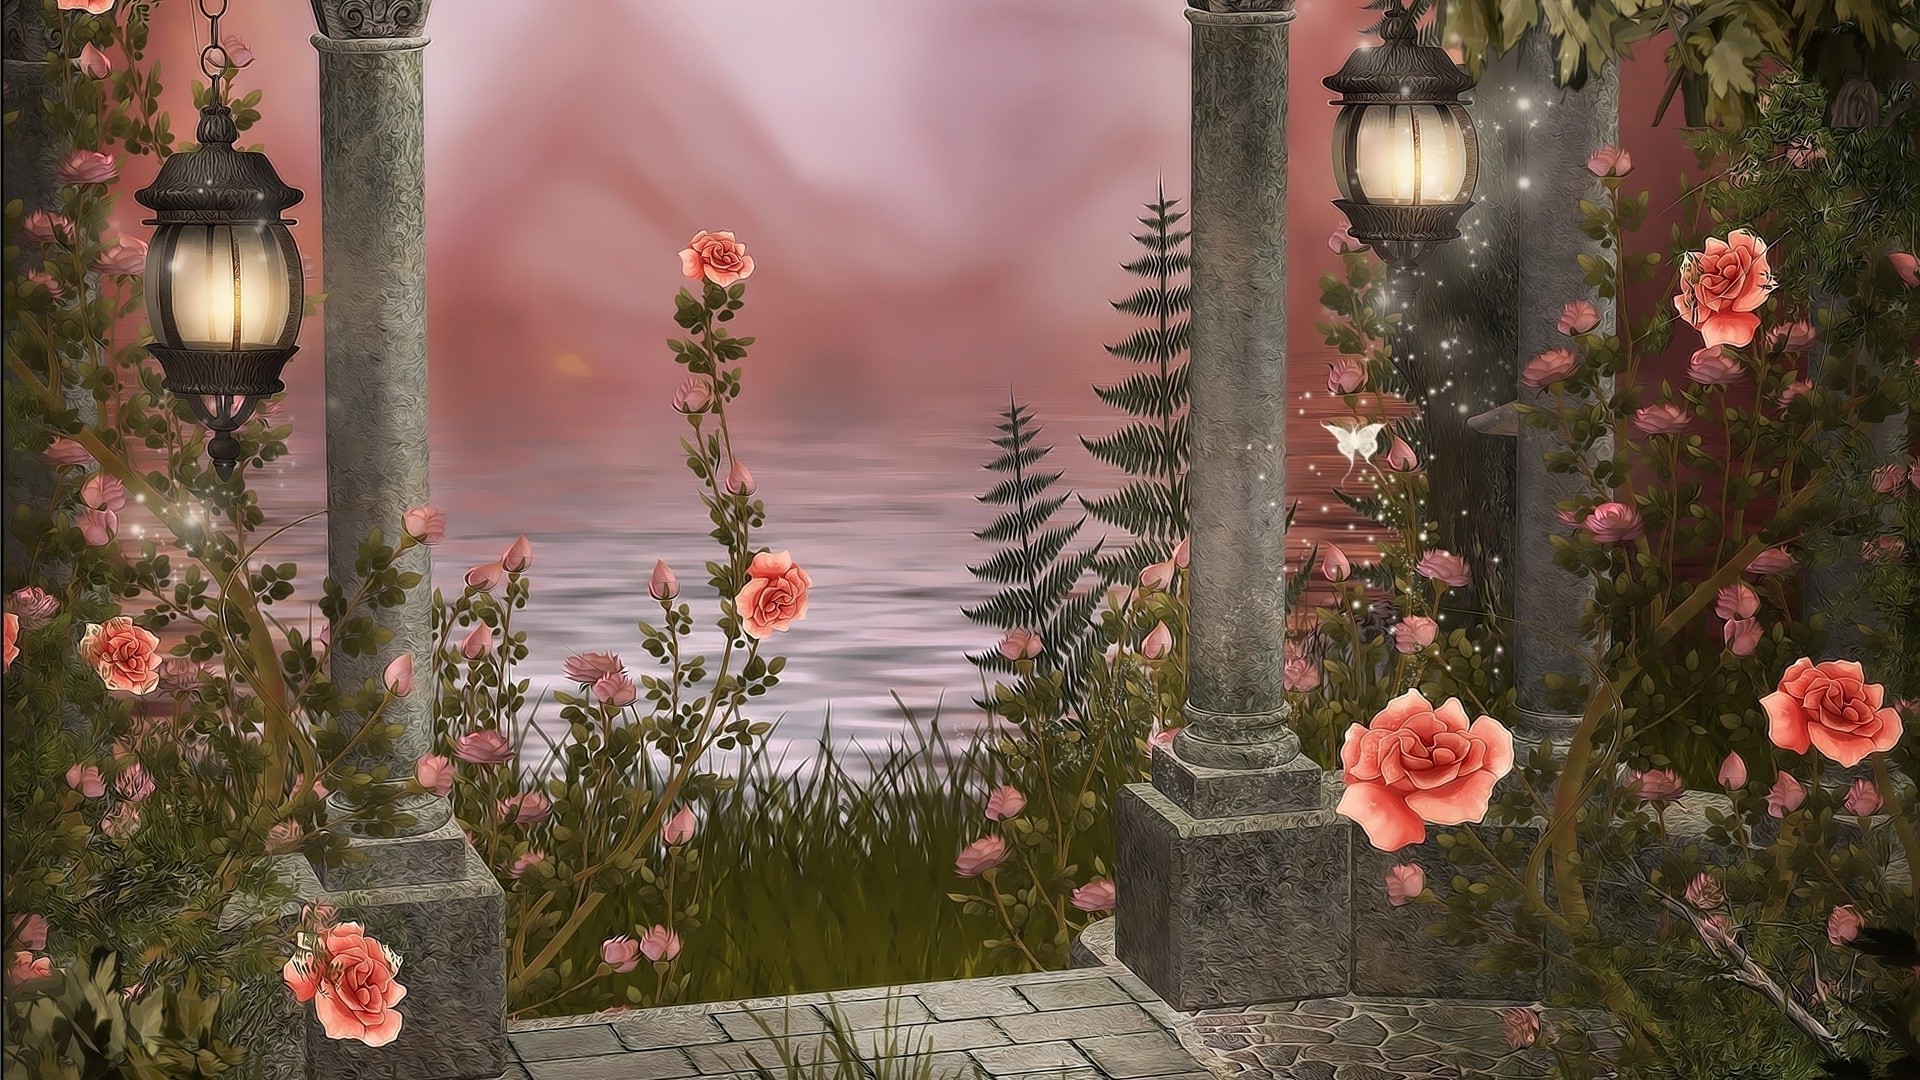 пейзажи цветок кладбище украшения религия дерево могила сад роза архитектура